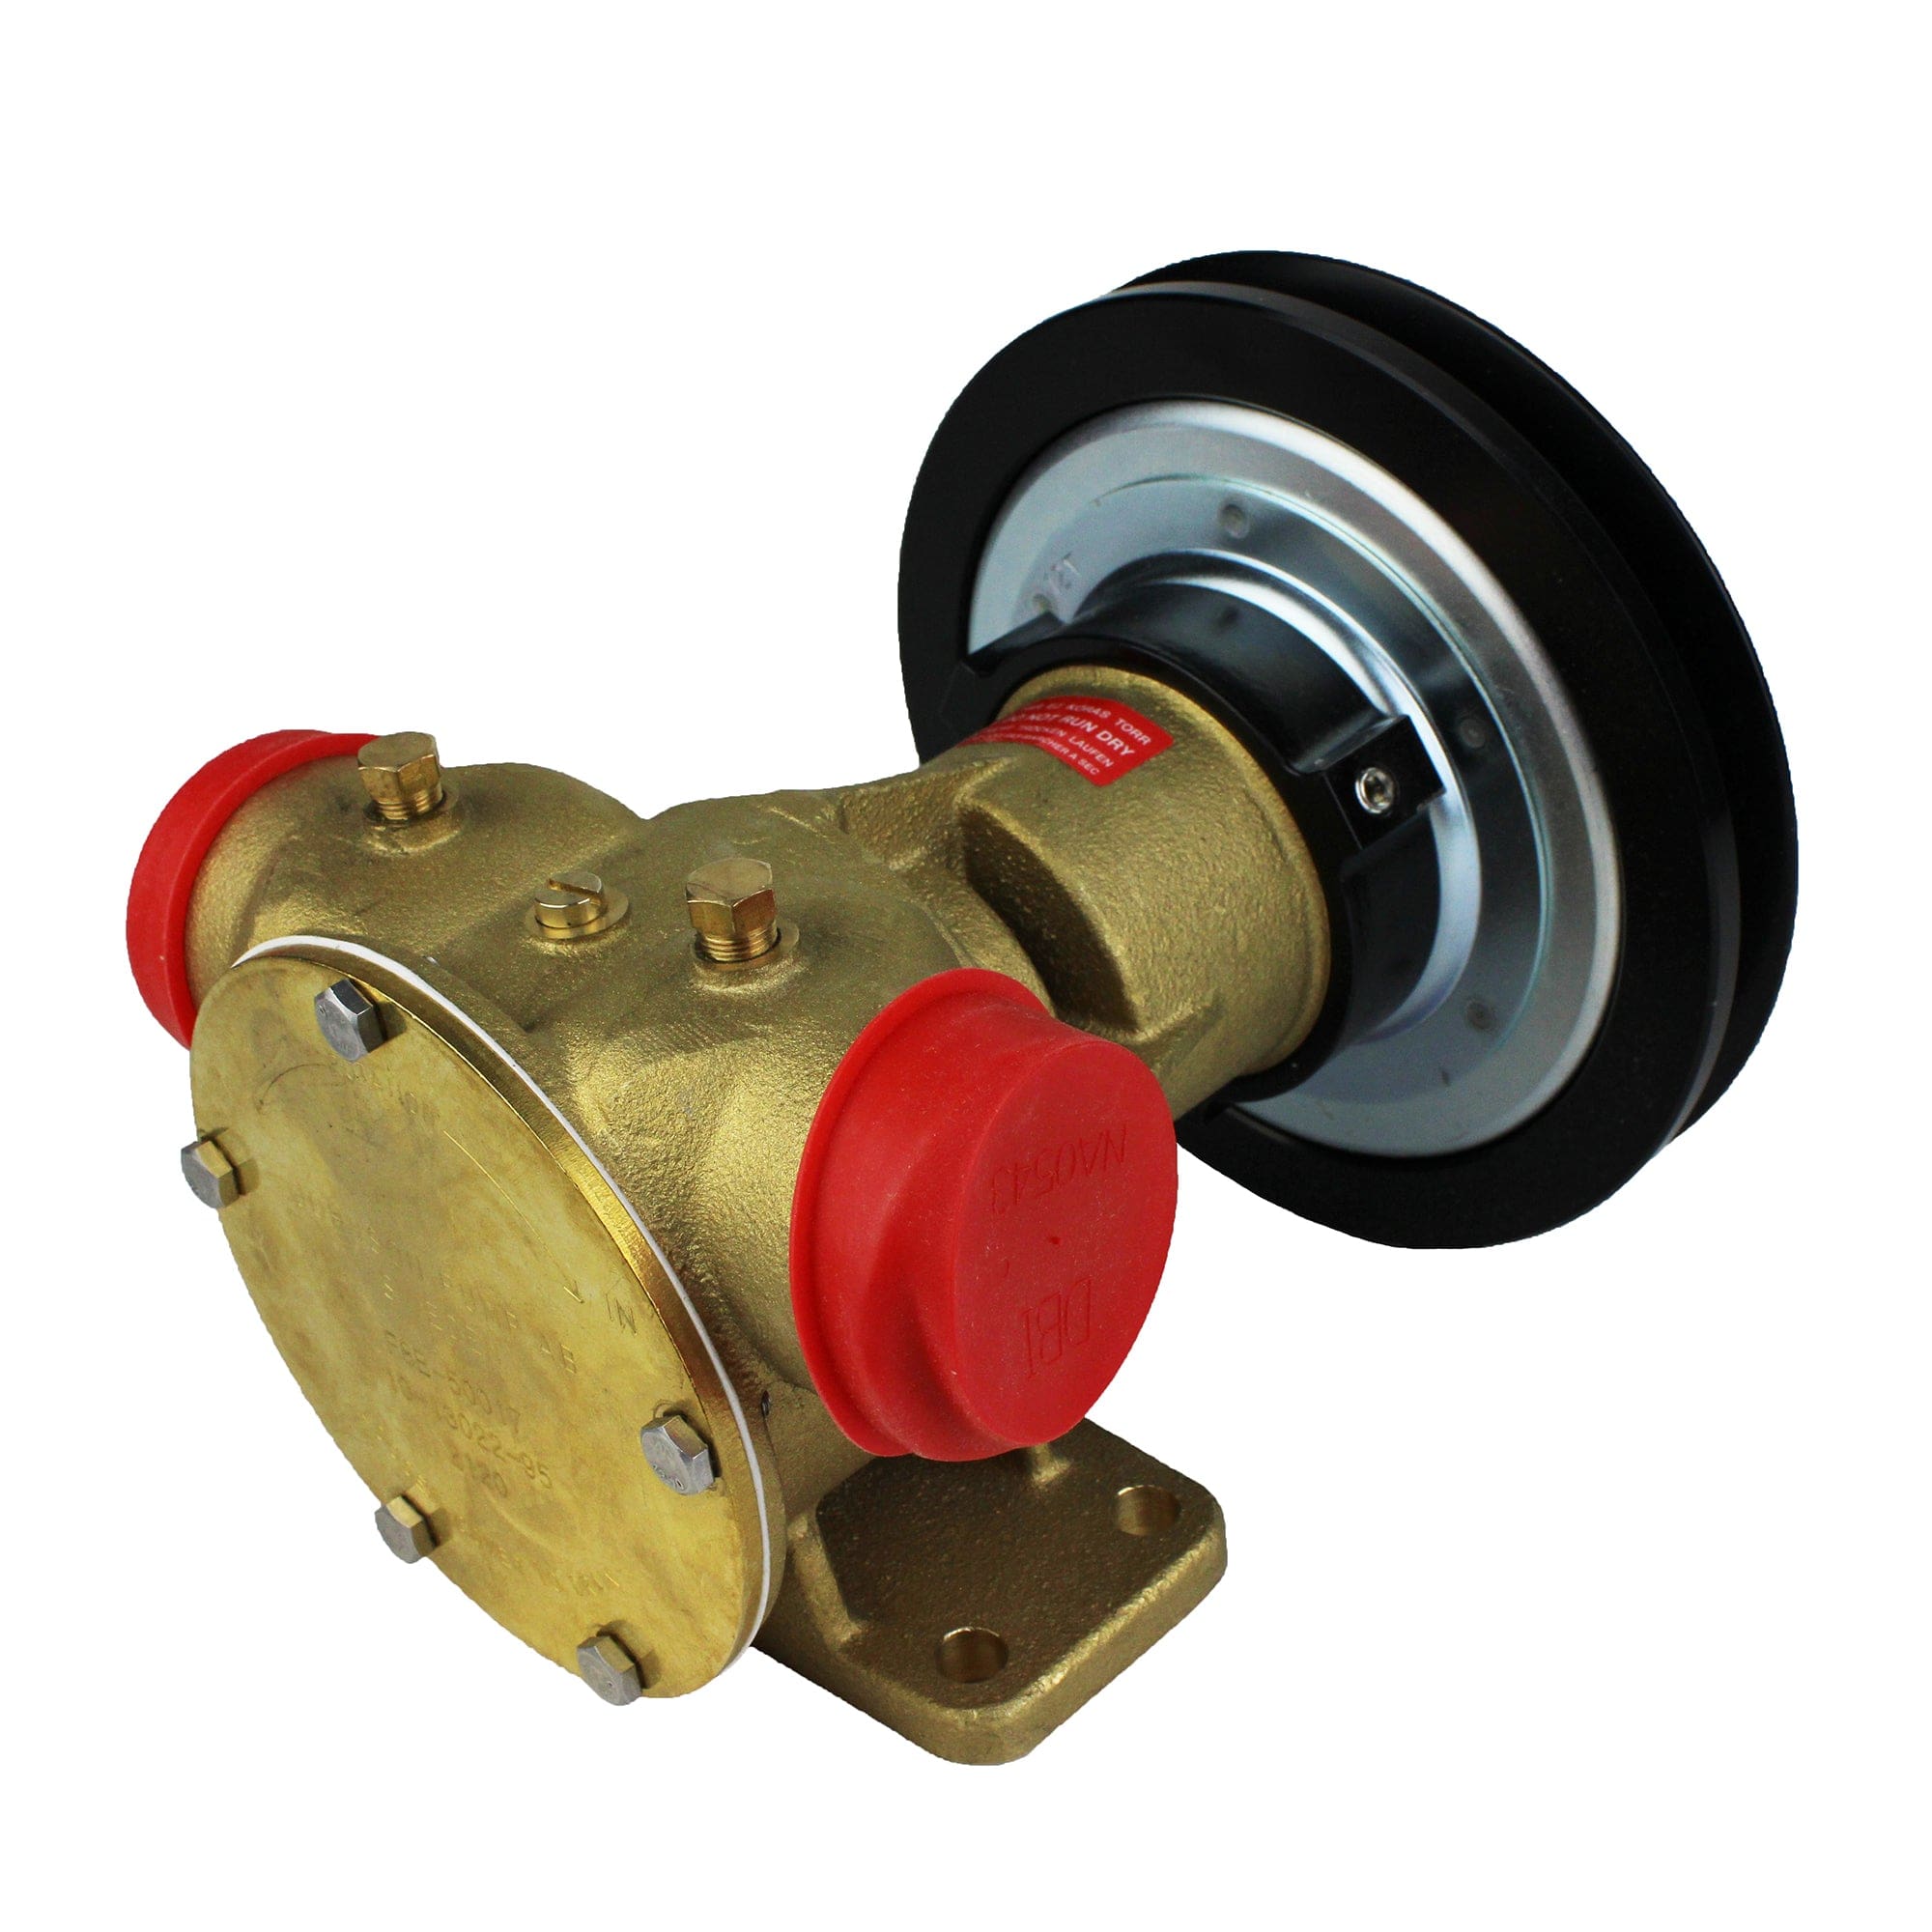 Johnson Pump 10-13022-95-3 12V F8b-50017 Electro Magnetic Clutch Impeller Pump, 1-1/4" NPT, 1XB7